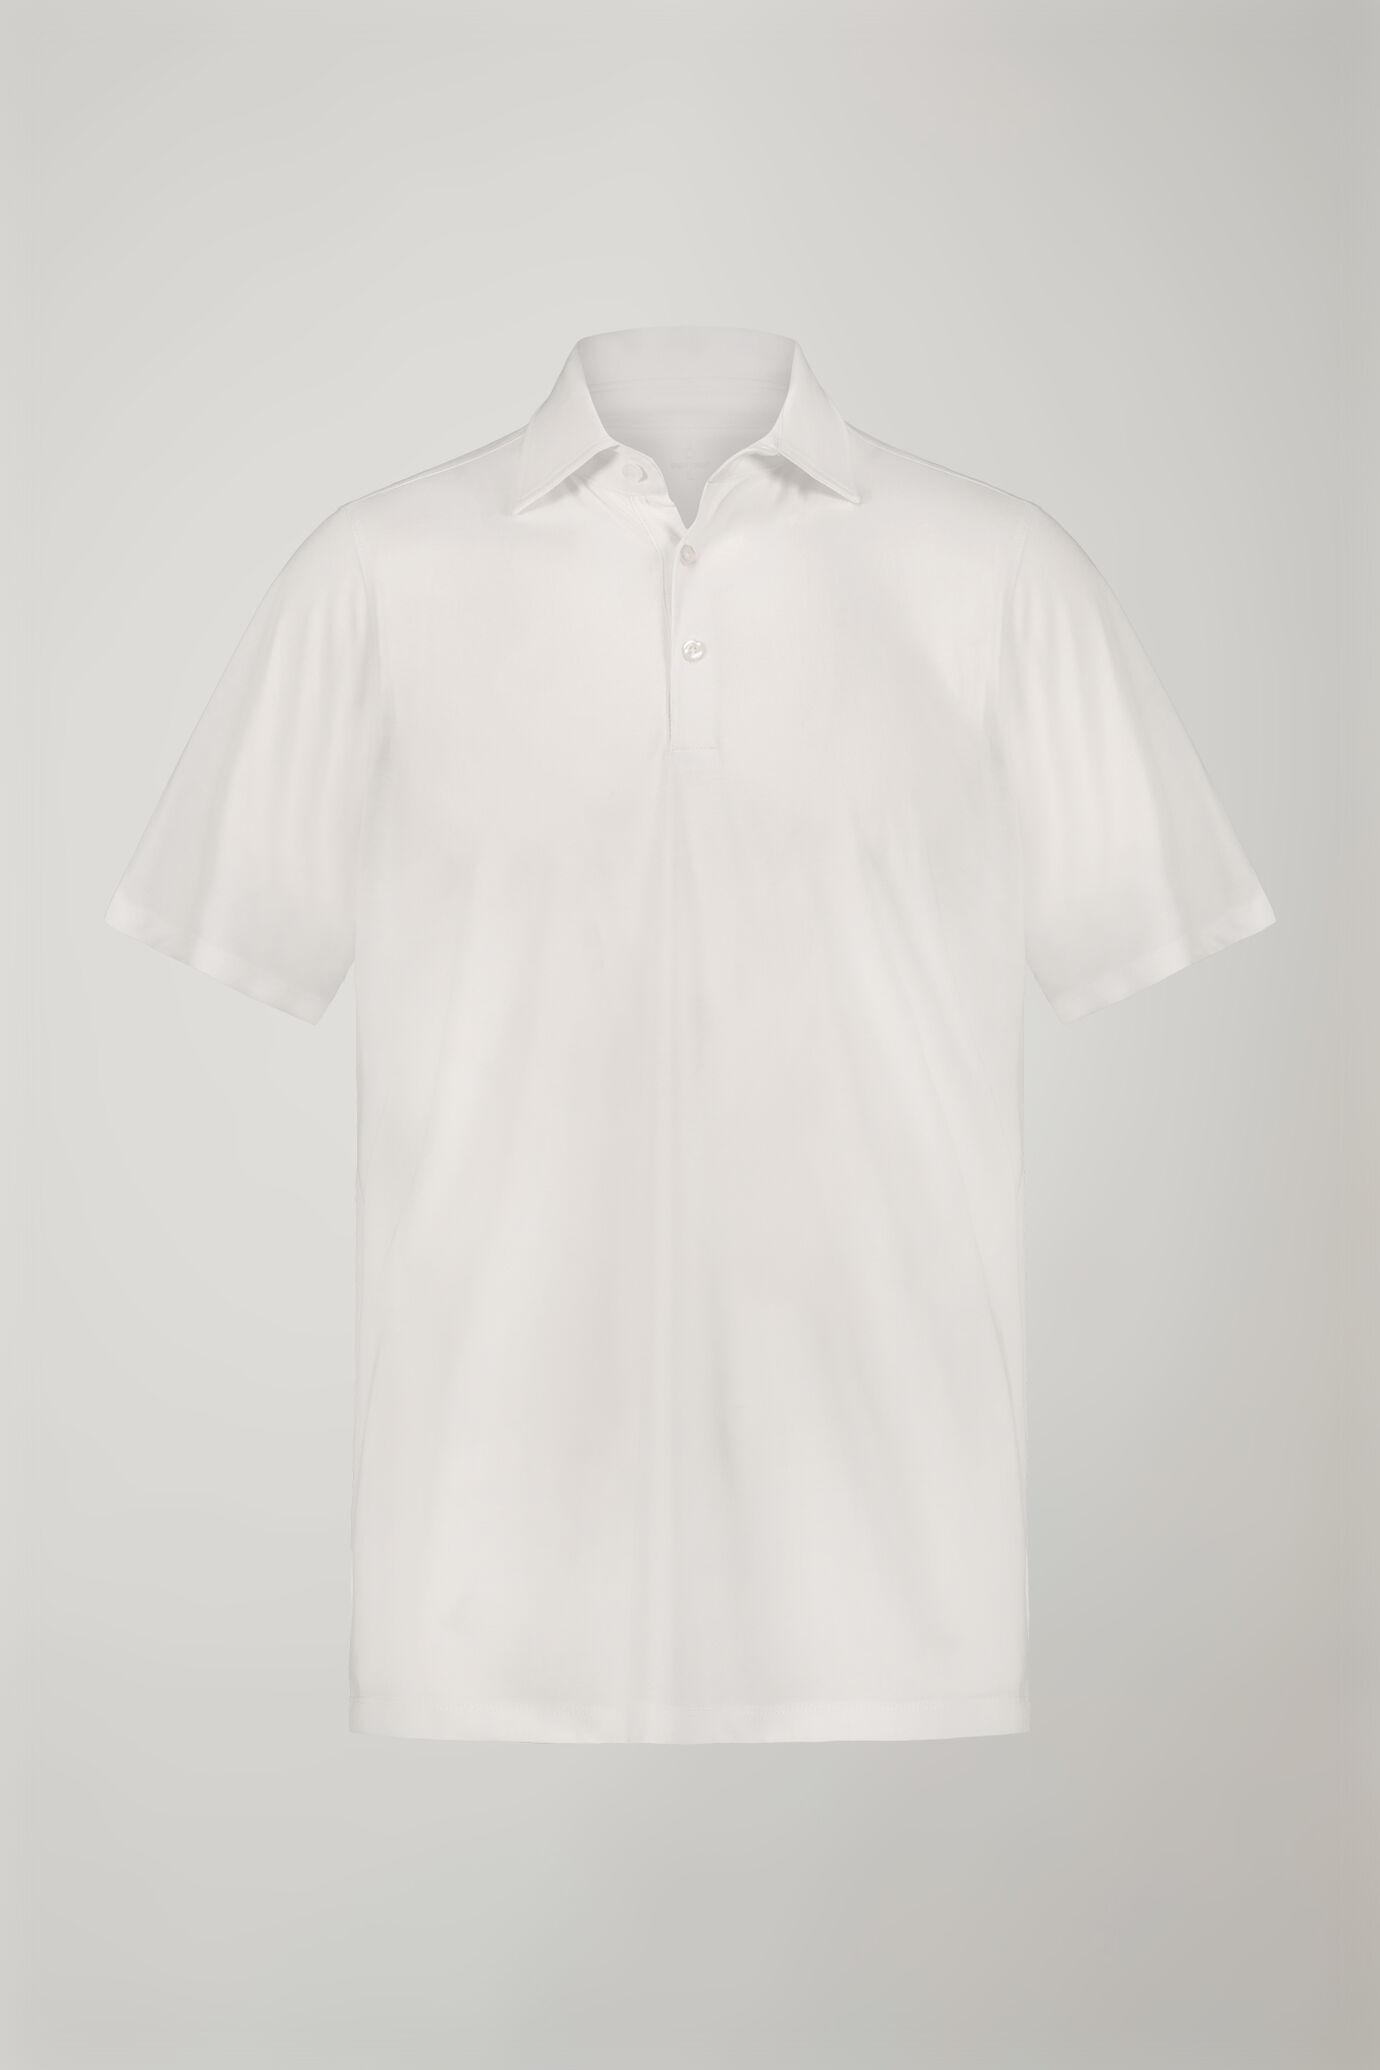 Men’s polo shirt short sleeves 100% supima cotton regular fit image number 4